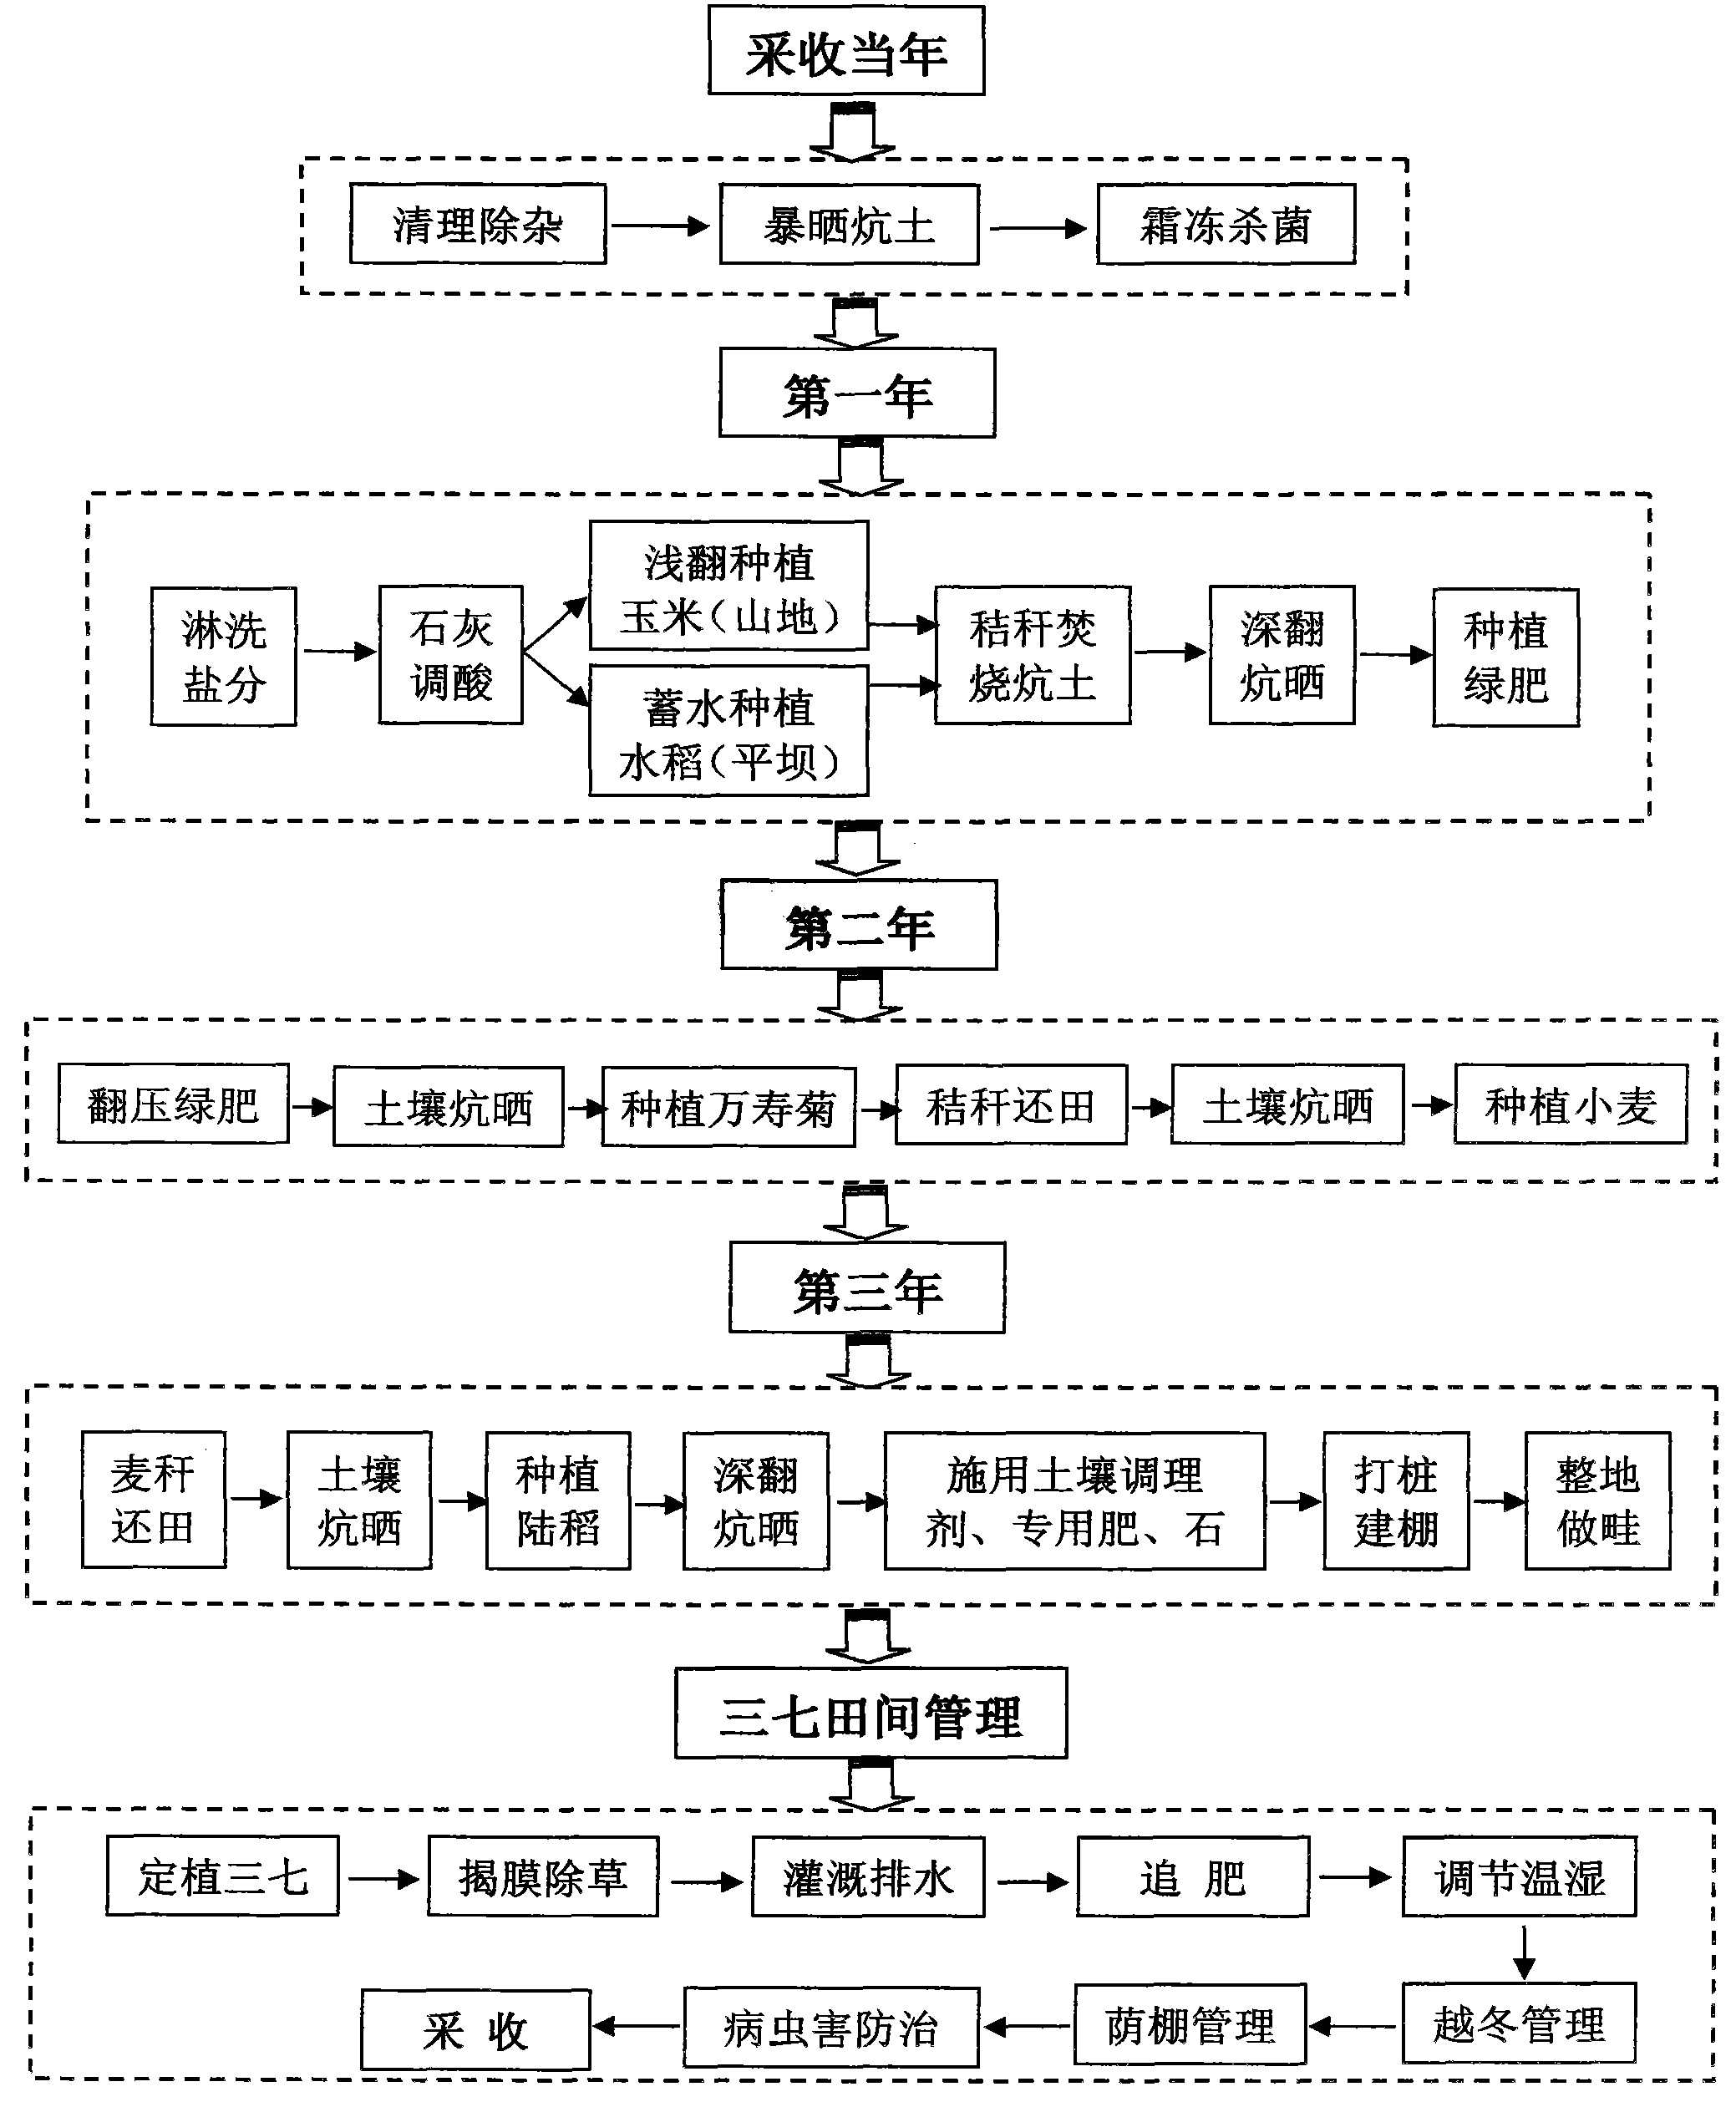 Processing method for shortening rotation cycle of panaxnotoginseng